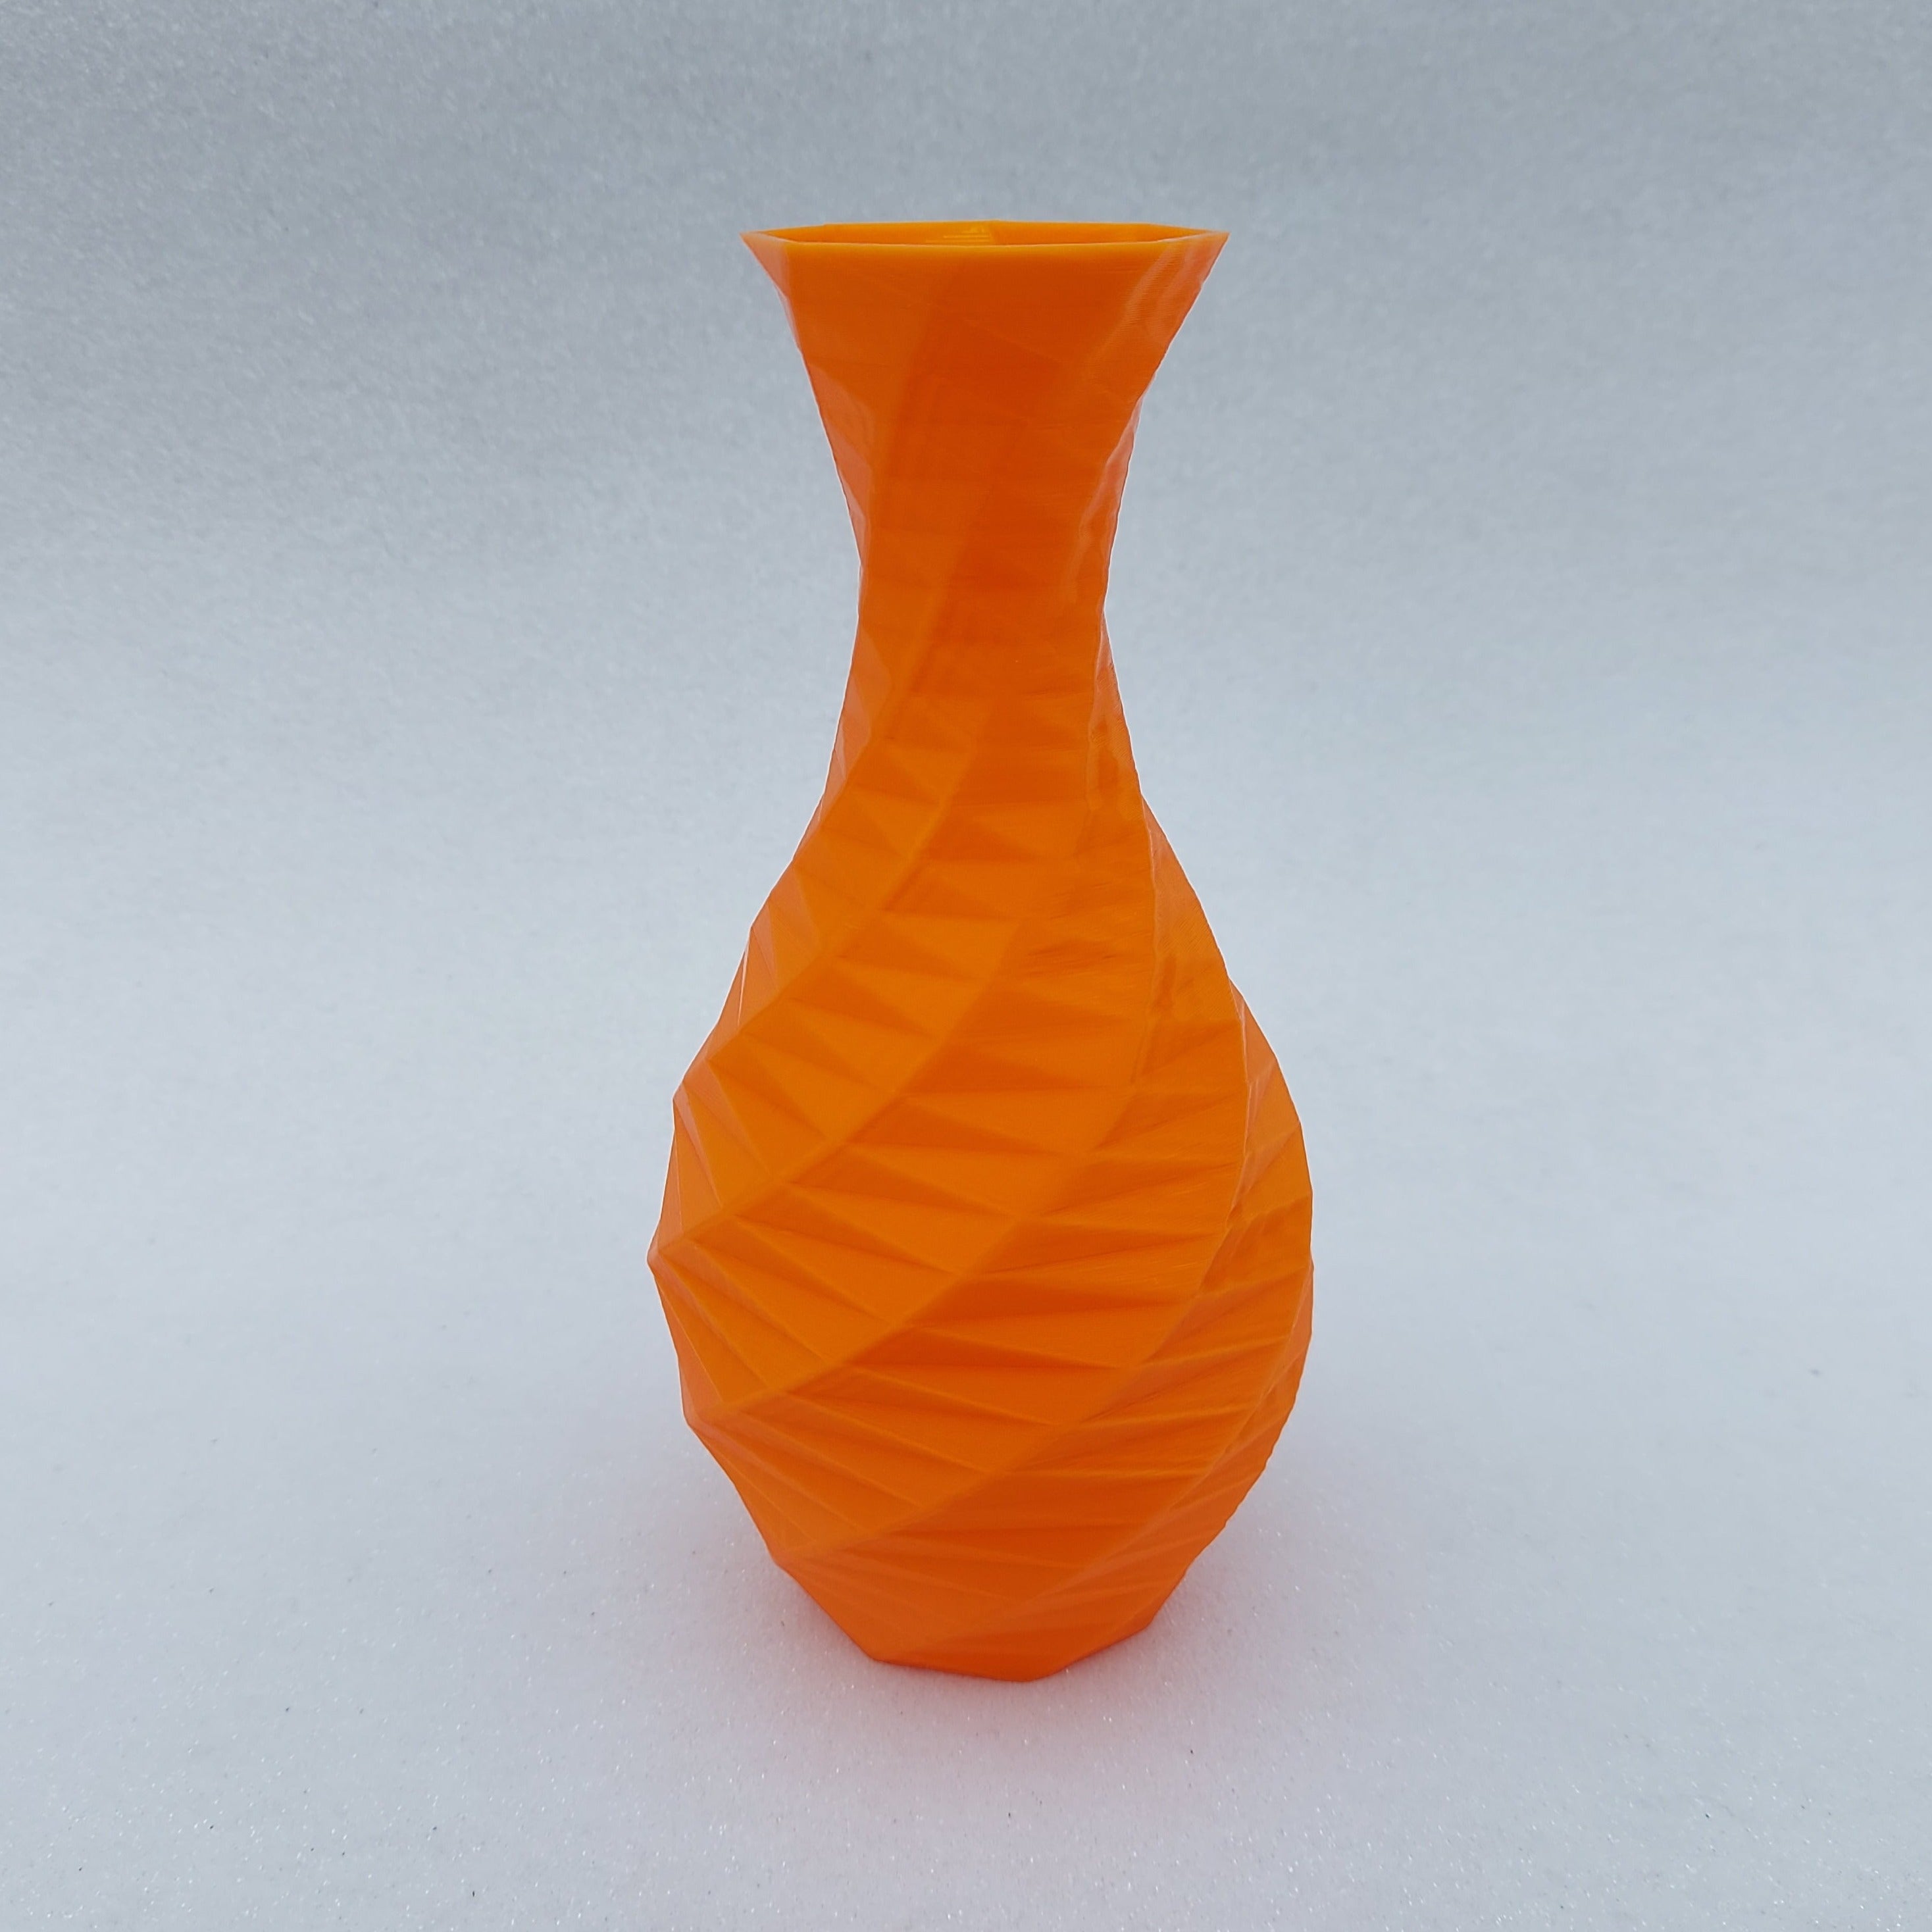 City 17 3d Printed 15cm Faceted Decorative Vase